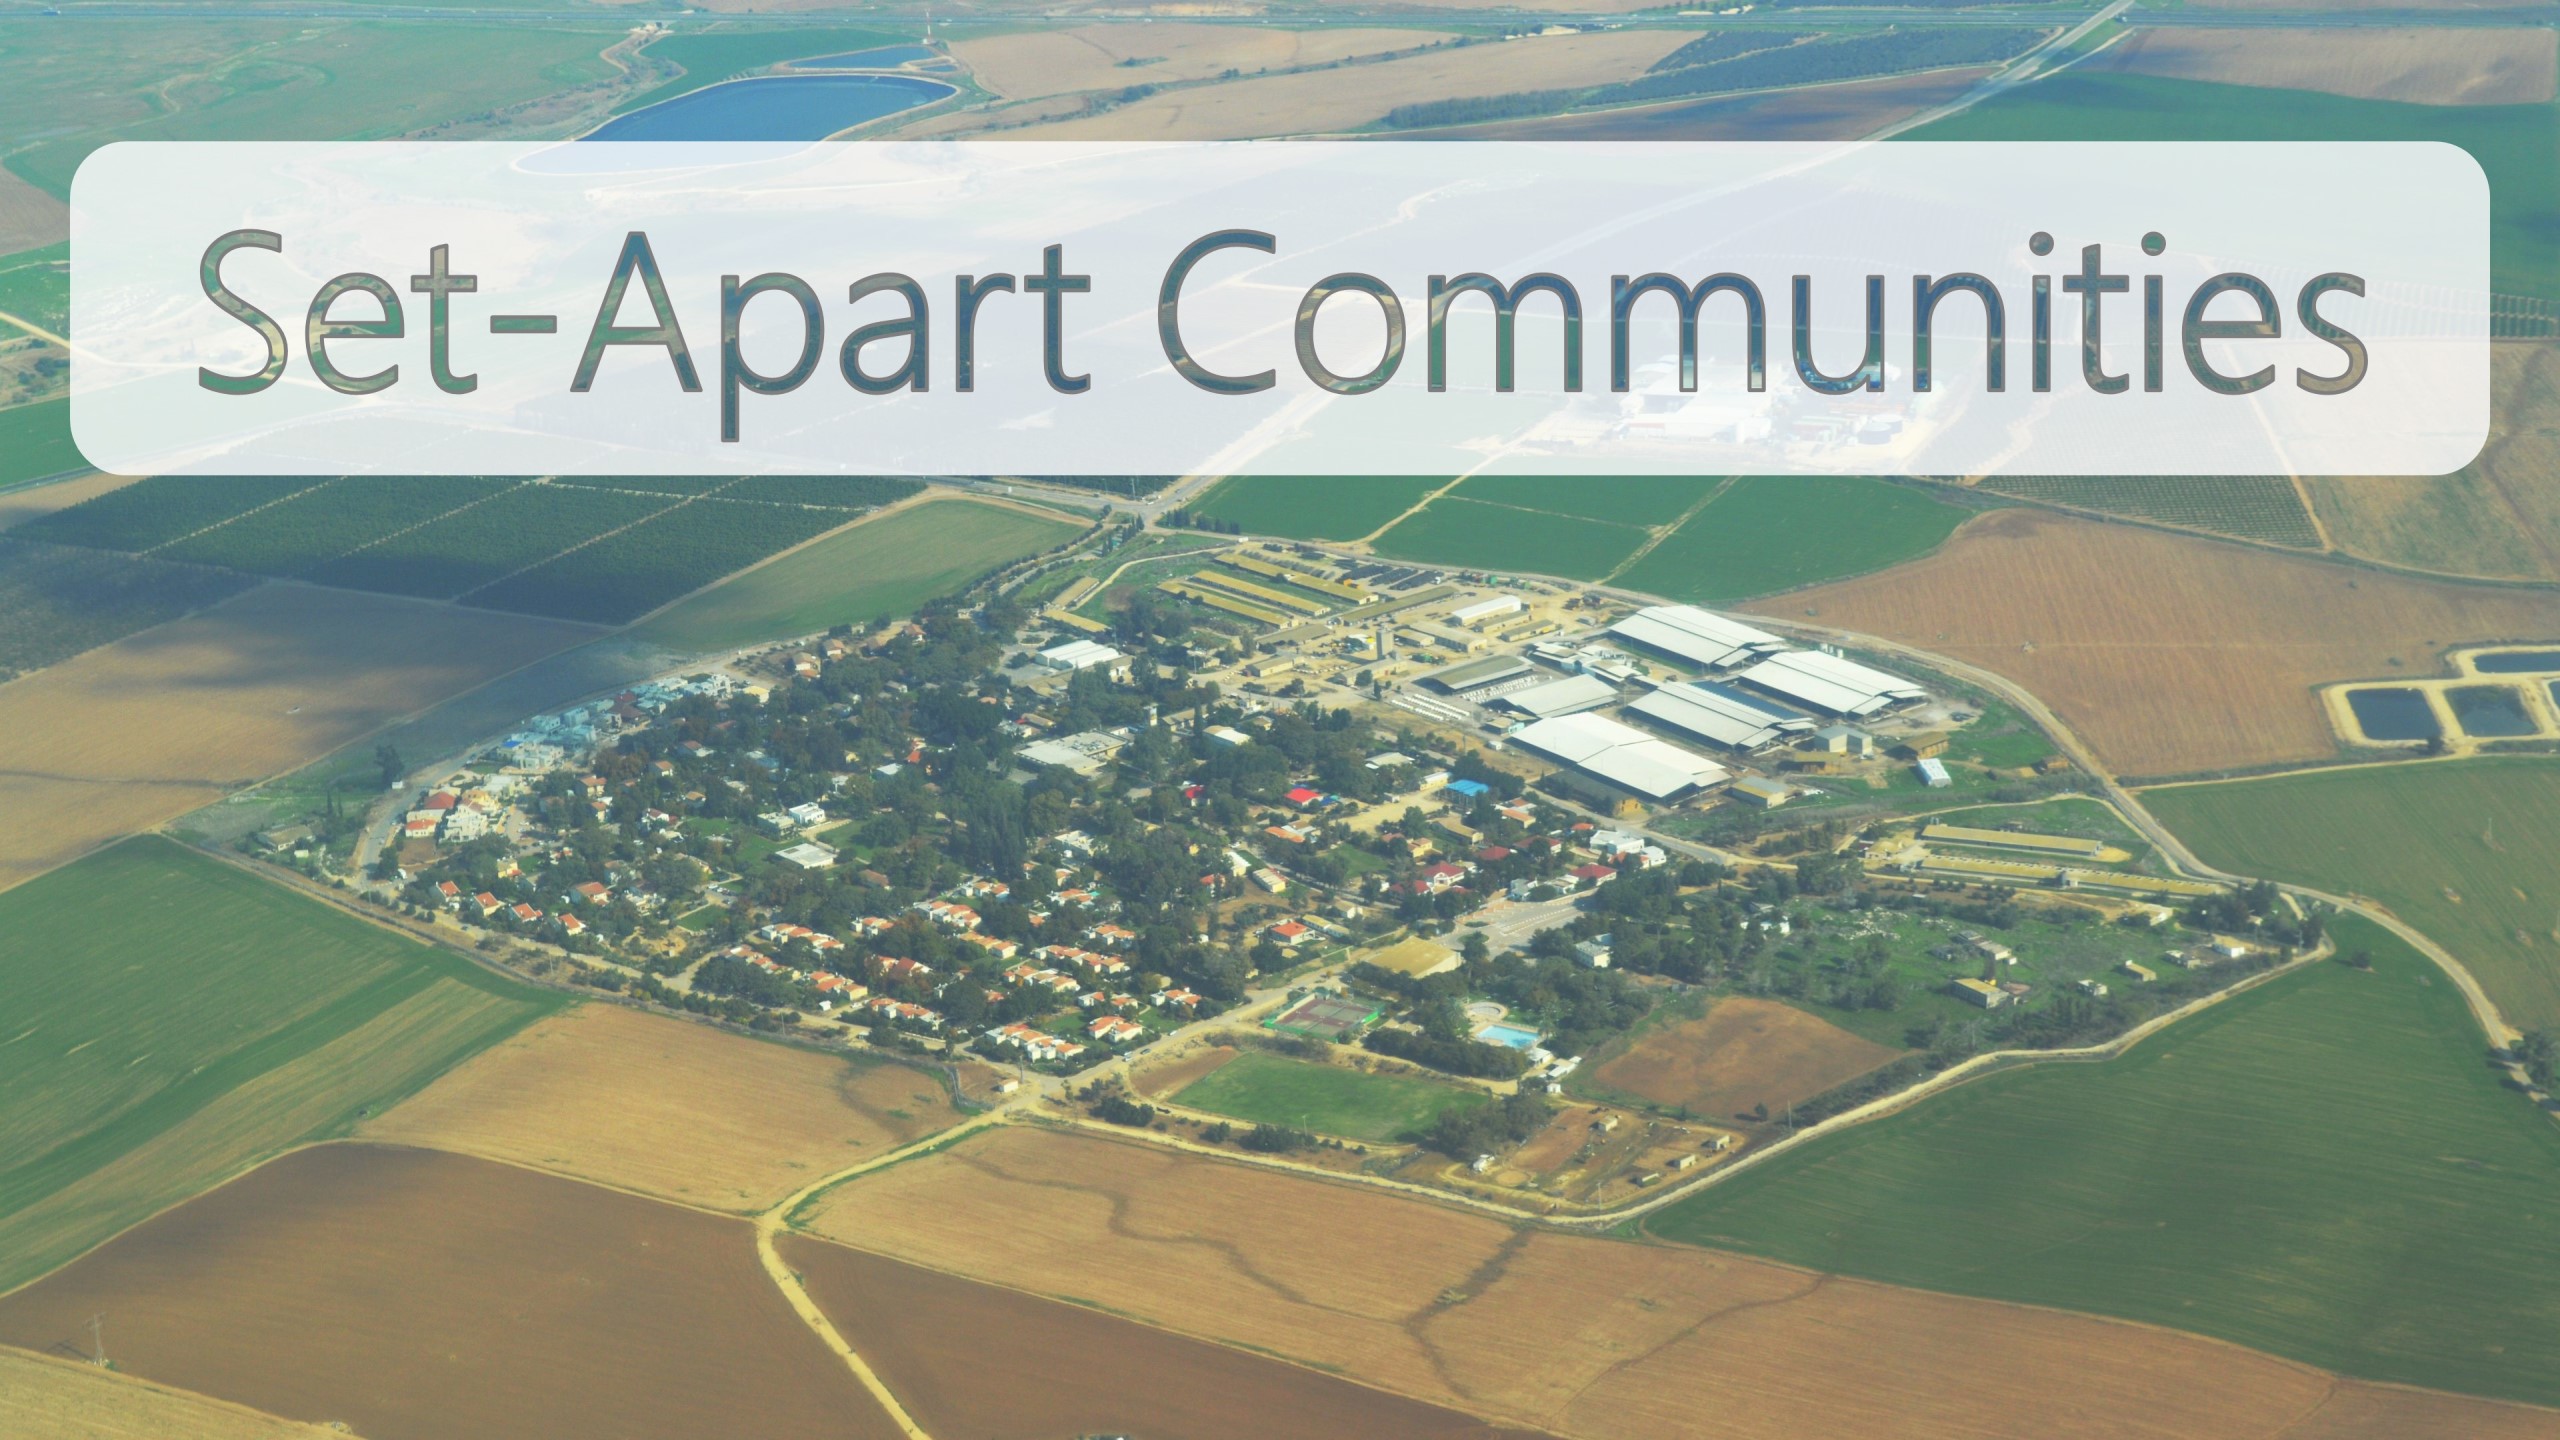 Set-Apart Communities